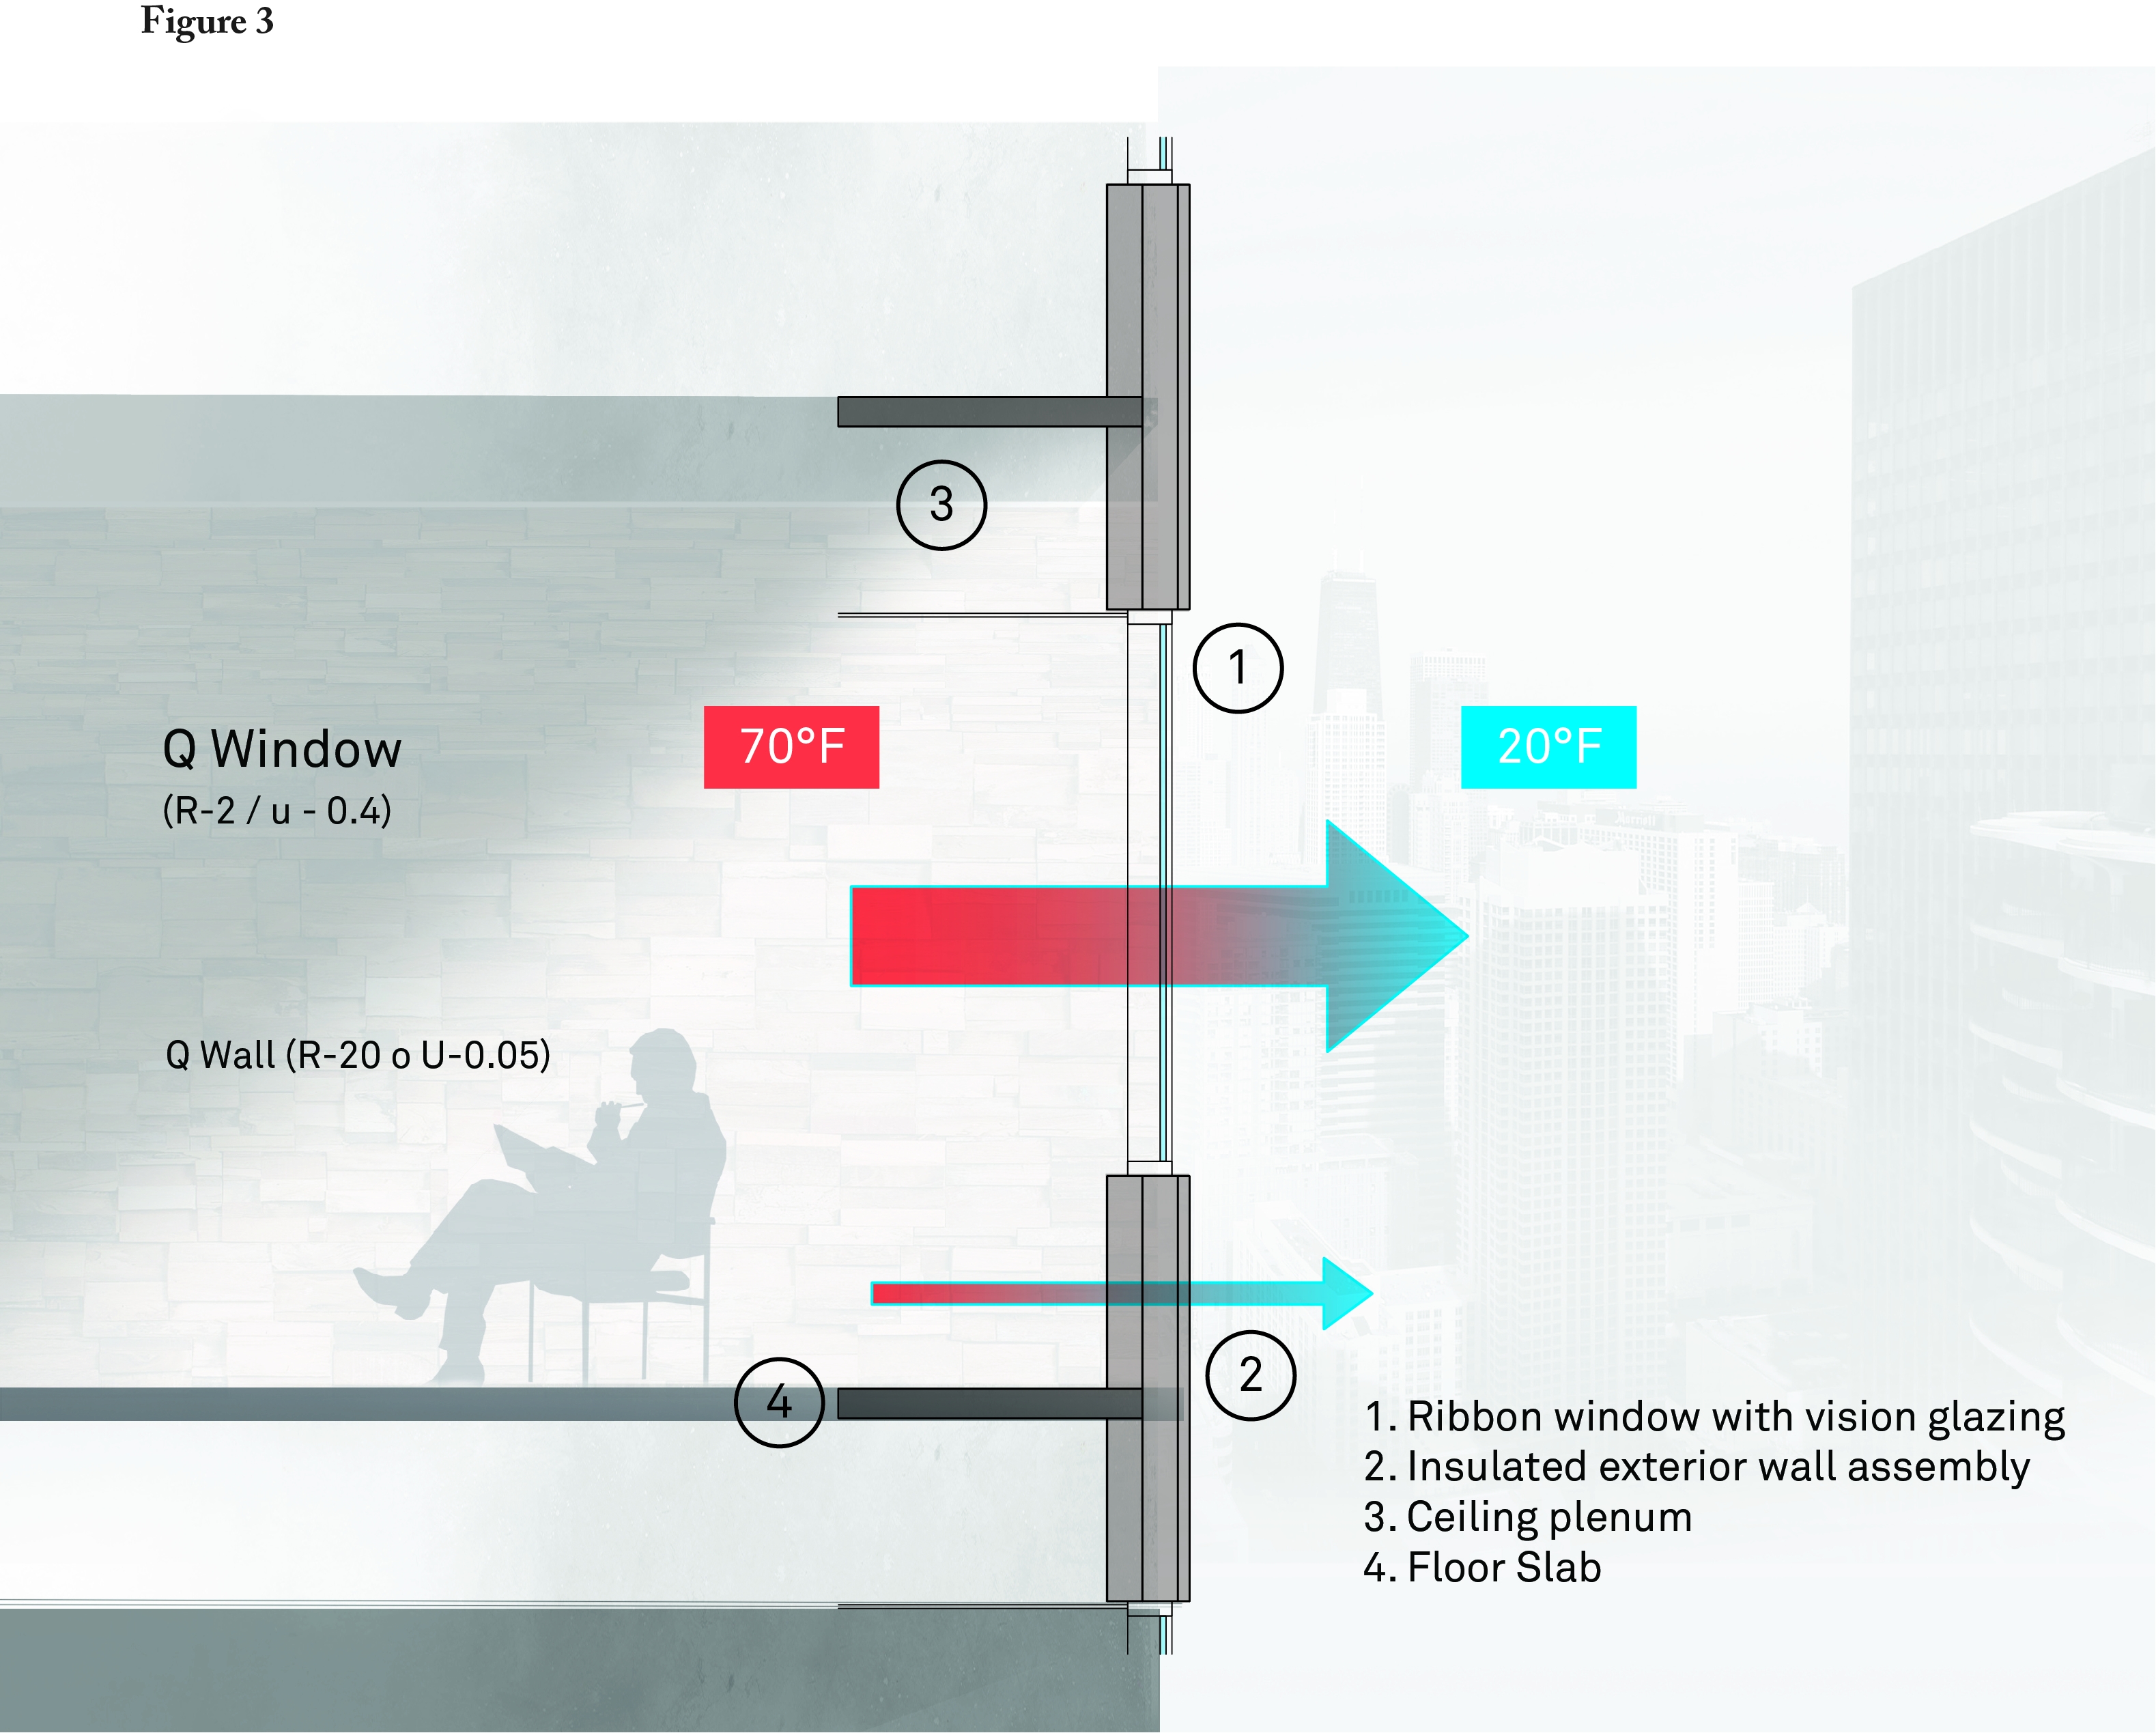 Heat loss diagram for Glass Building Design.